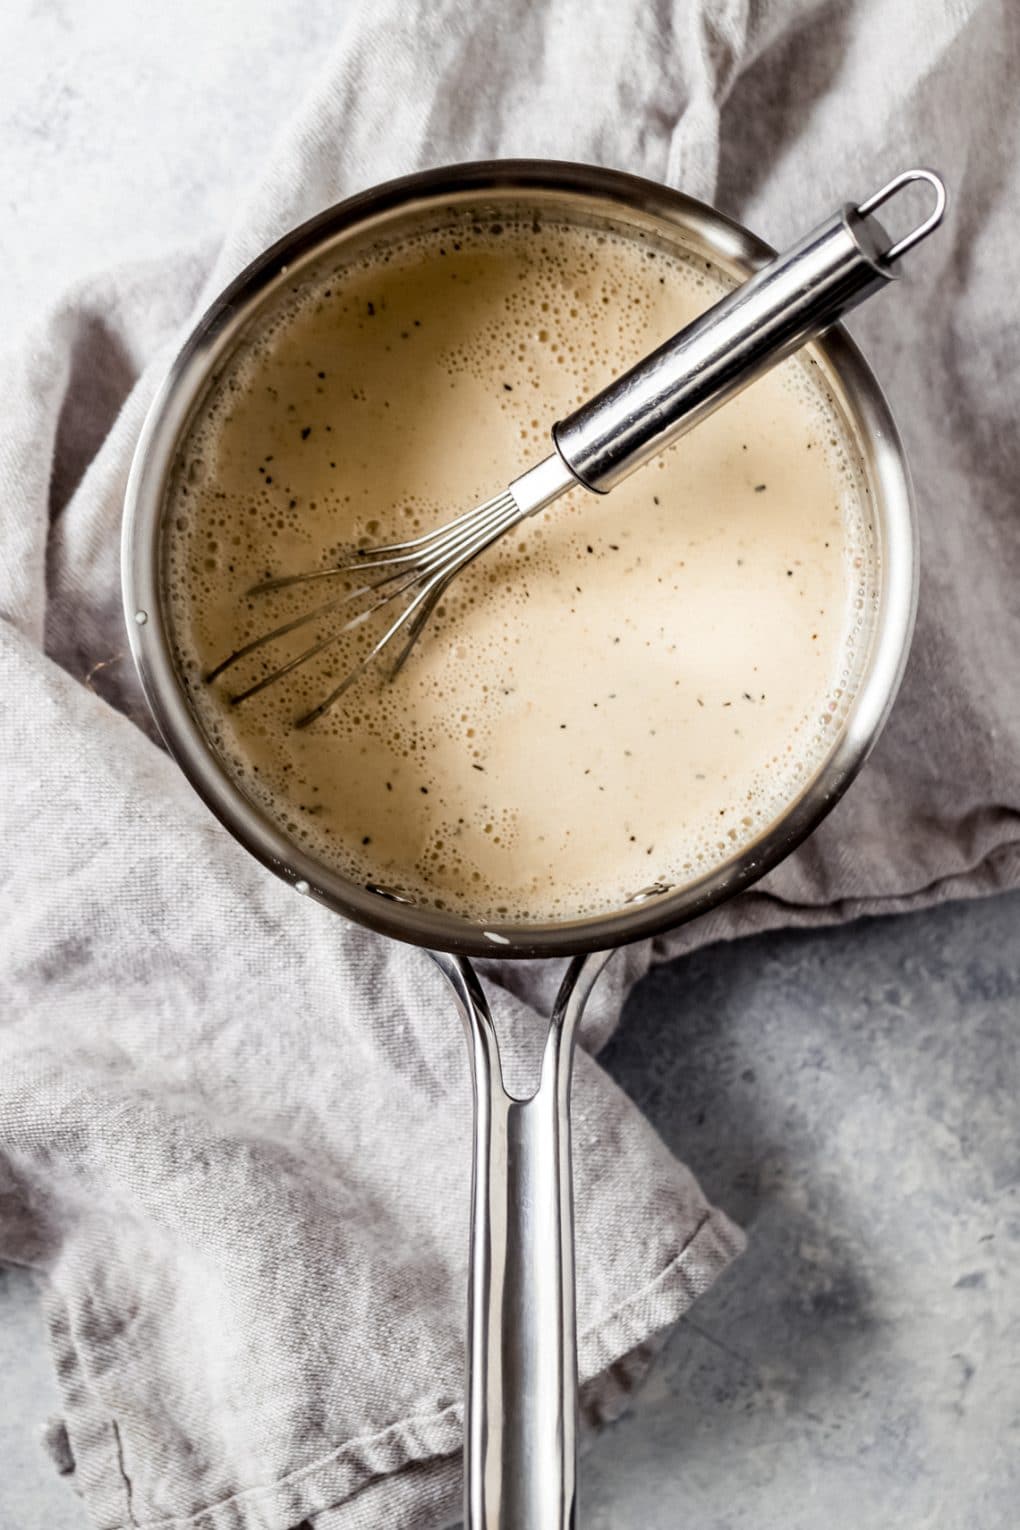 heavy cream and earl grey tea cooking in a saucepan